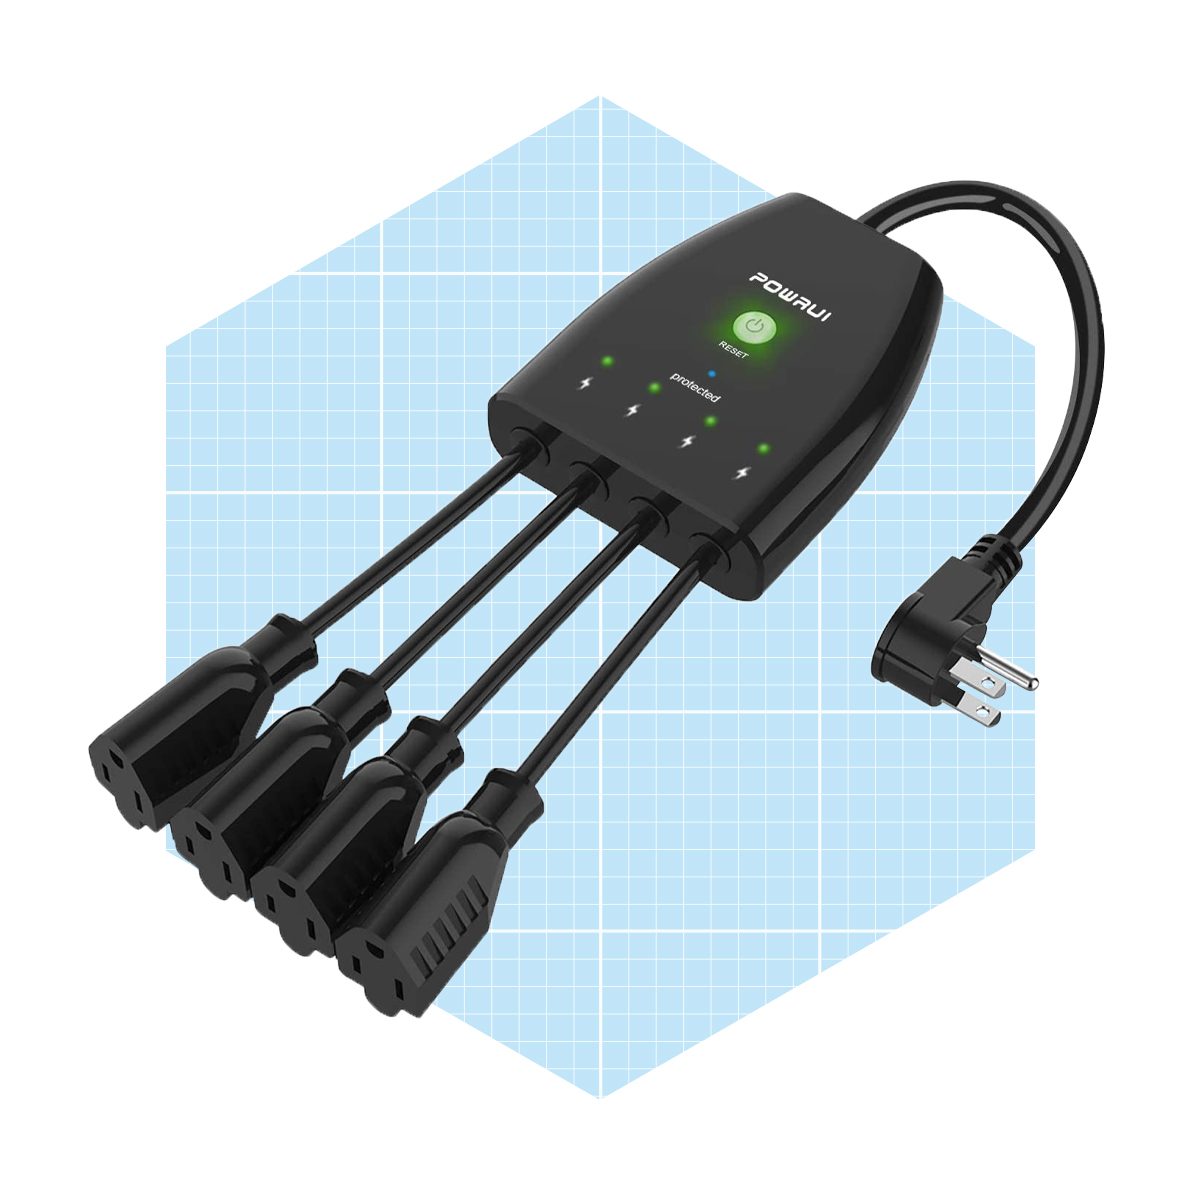 Outdoor Smart Plug Ecomm Amazon.com